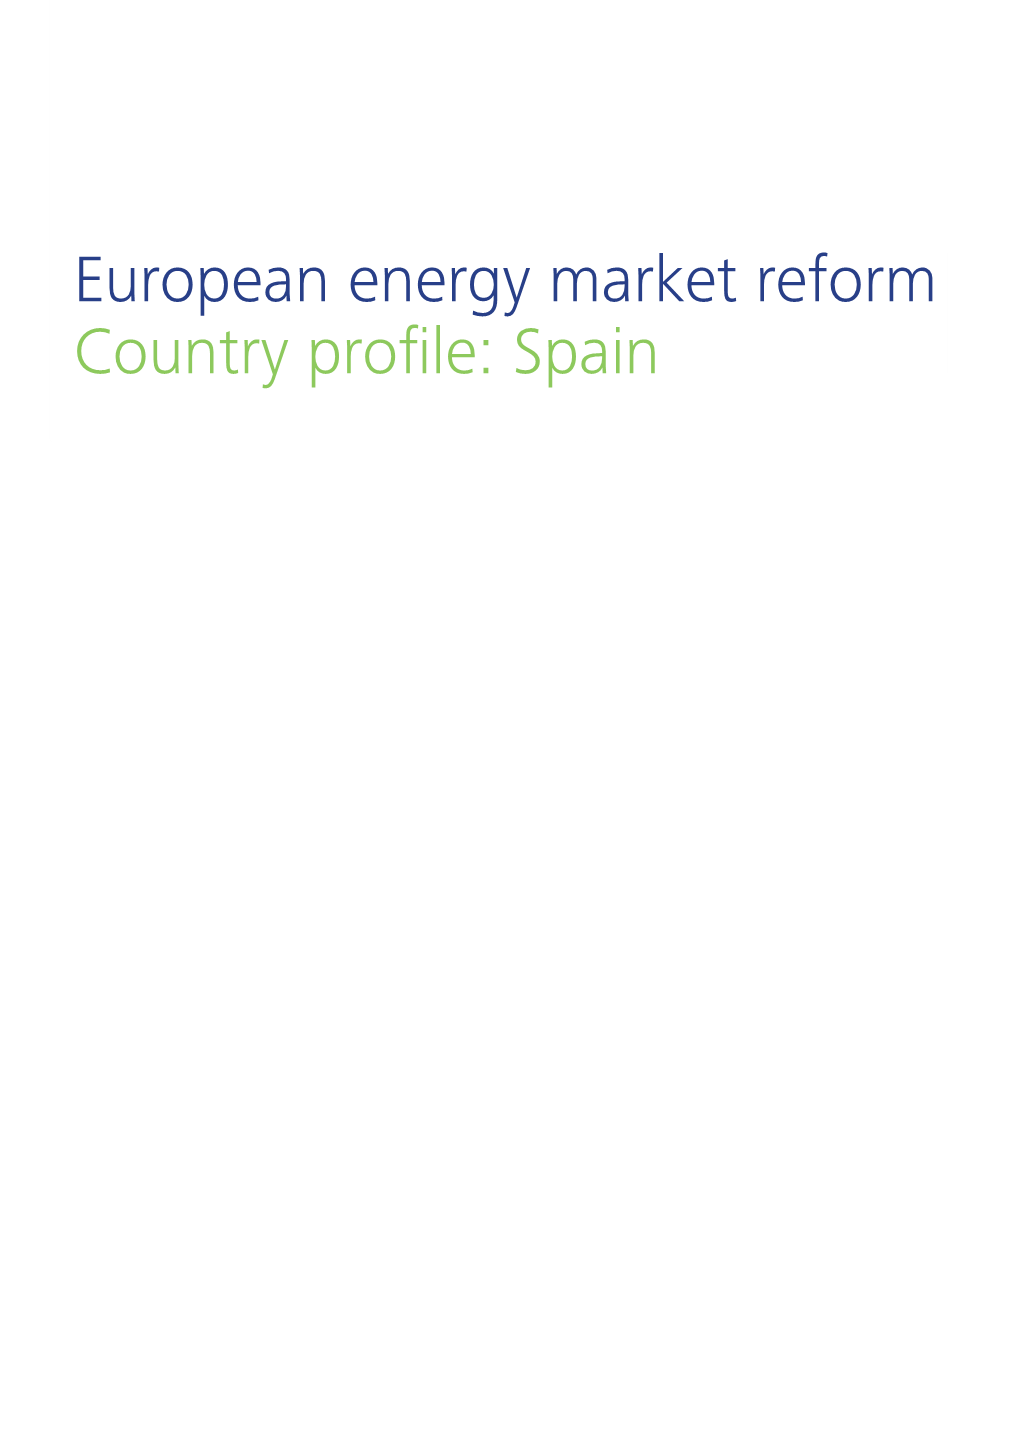 European Energy Market Reform Country Profile: Spain